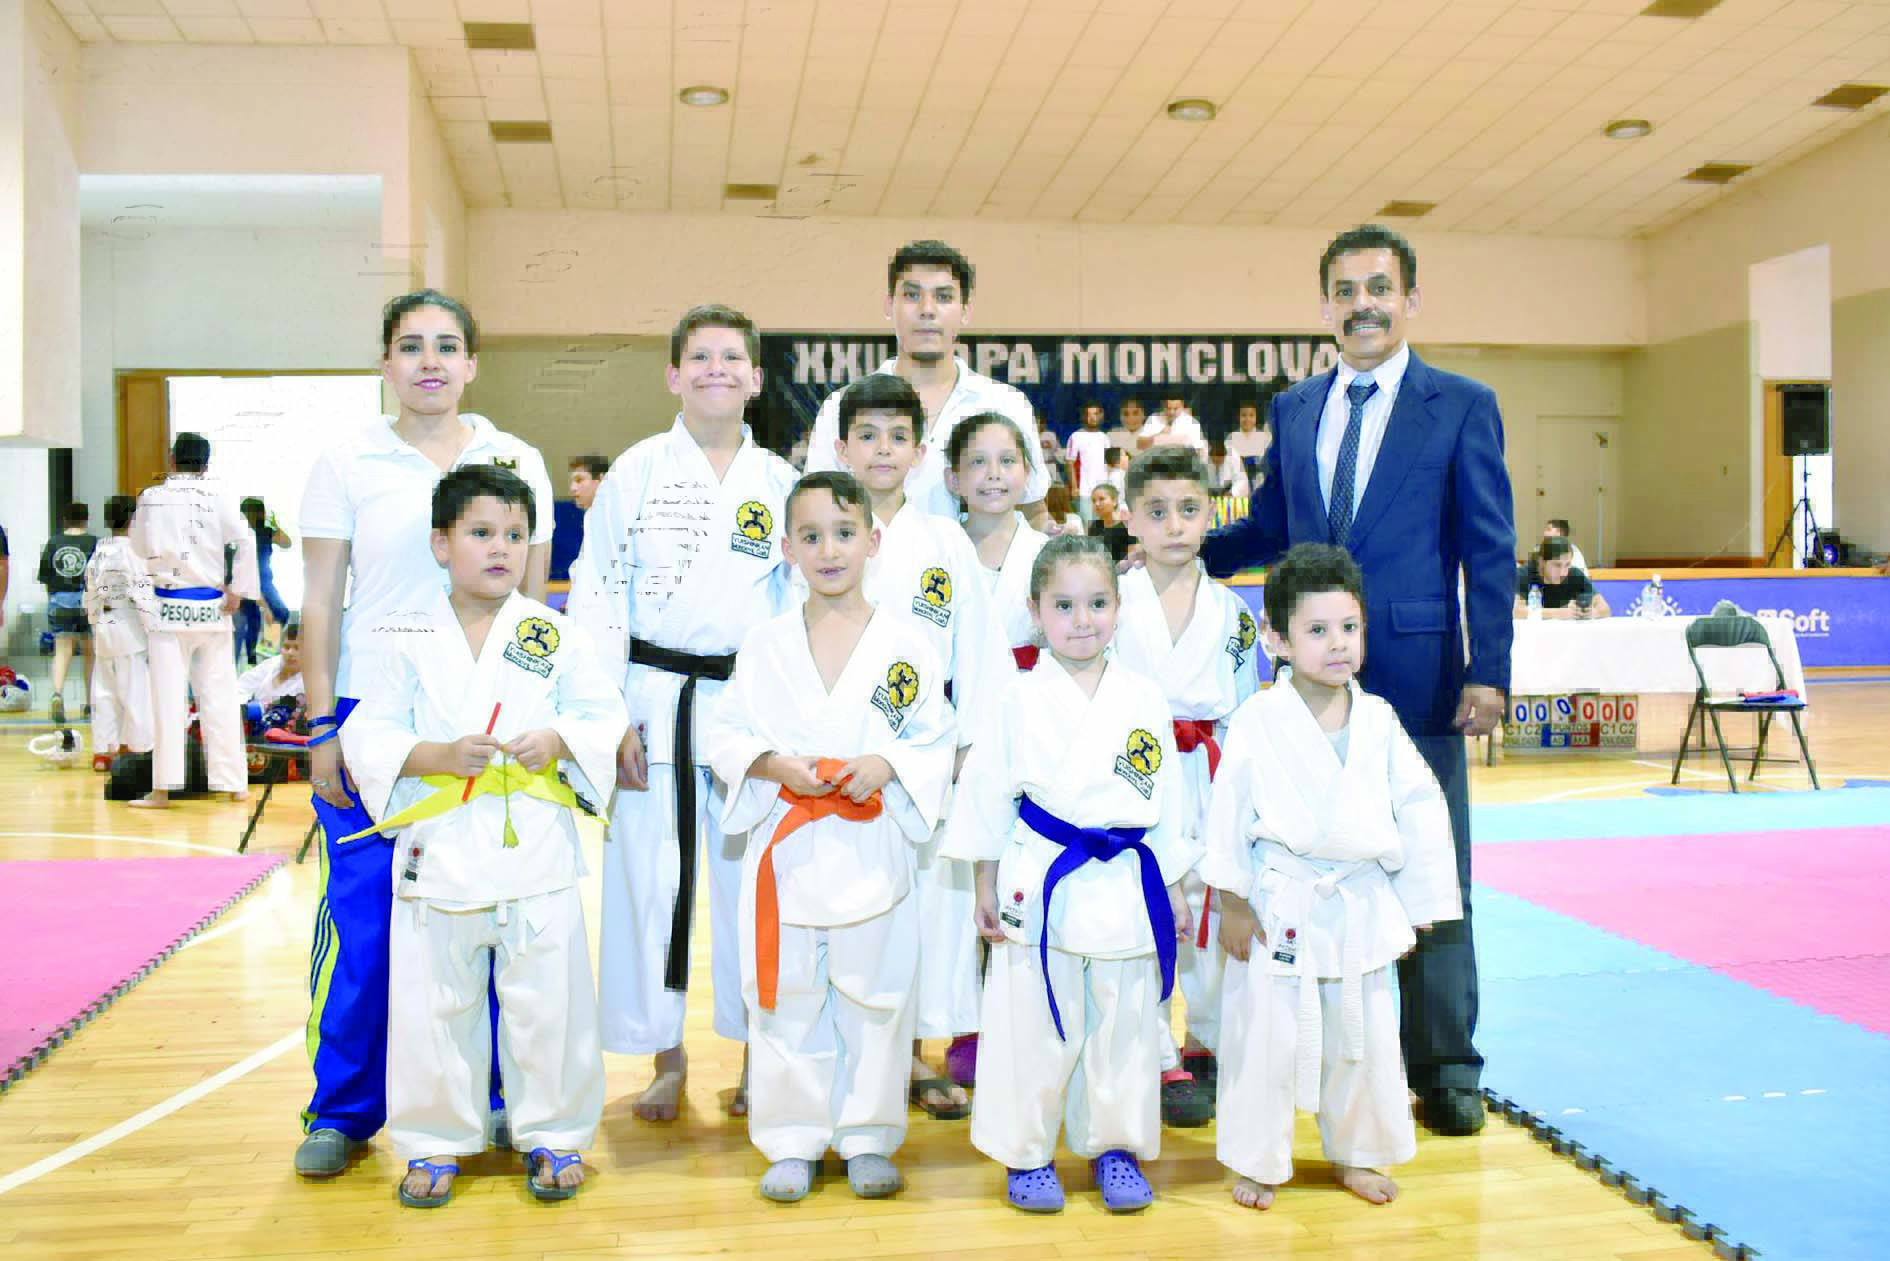 Éxito Torneo de Karate, realizan XXII Copa Monclova 2019